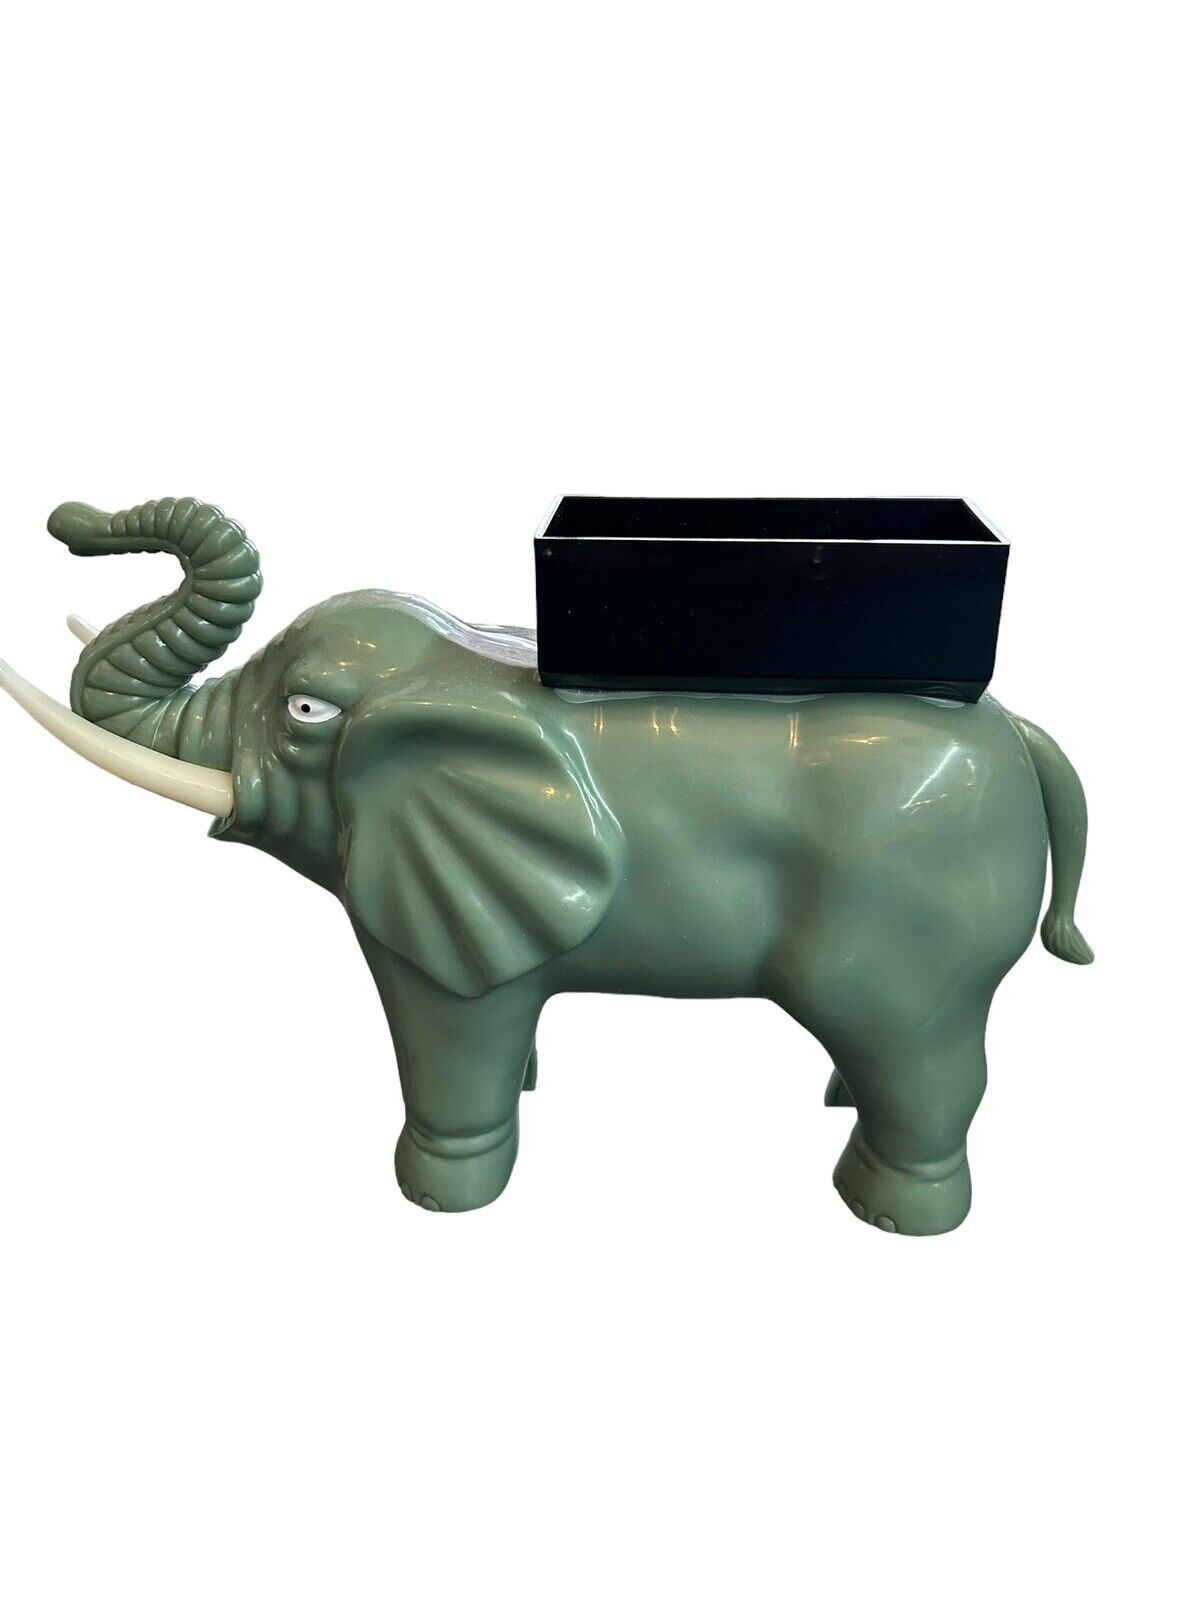 Vintage Novelty no lid Elephant Cigarette Tobacco Dispenser please see pic